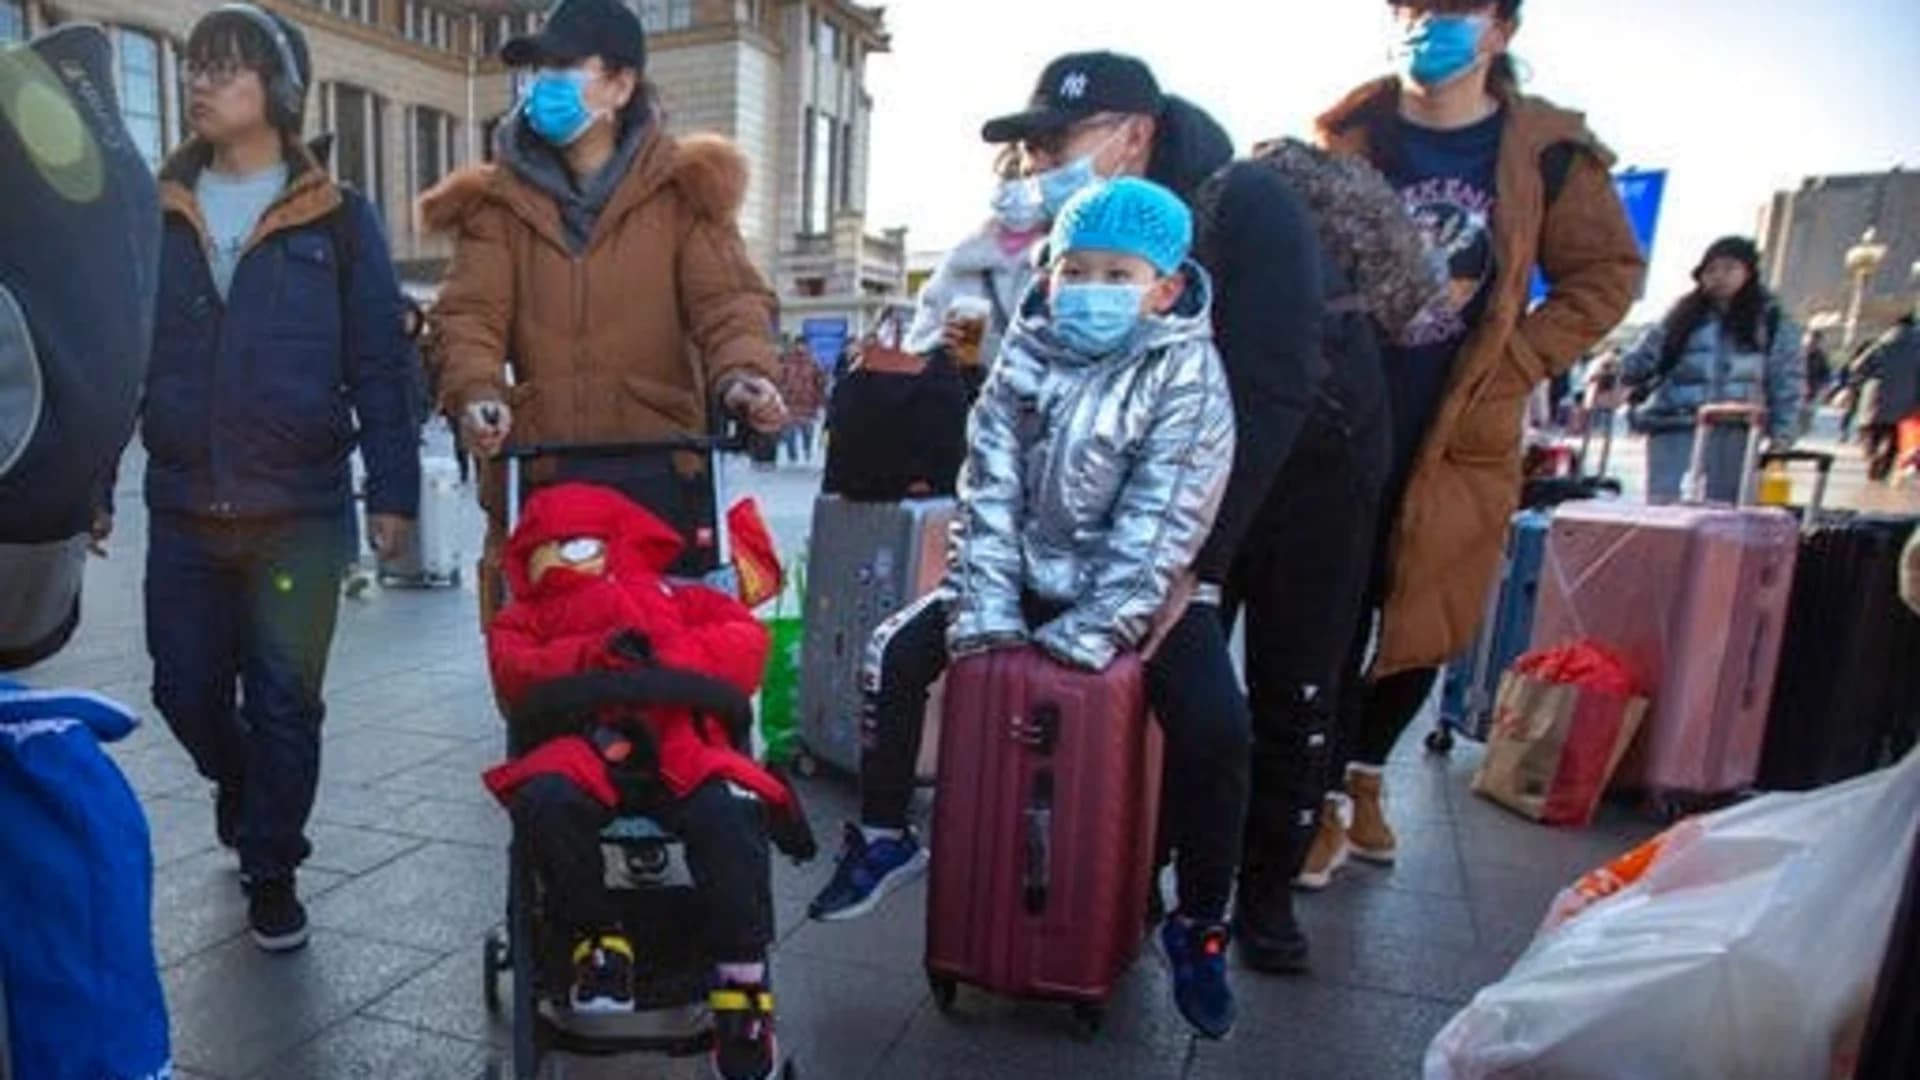 China locking down cities with 18 million to stop virus